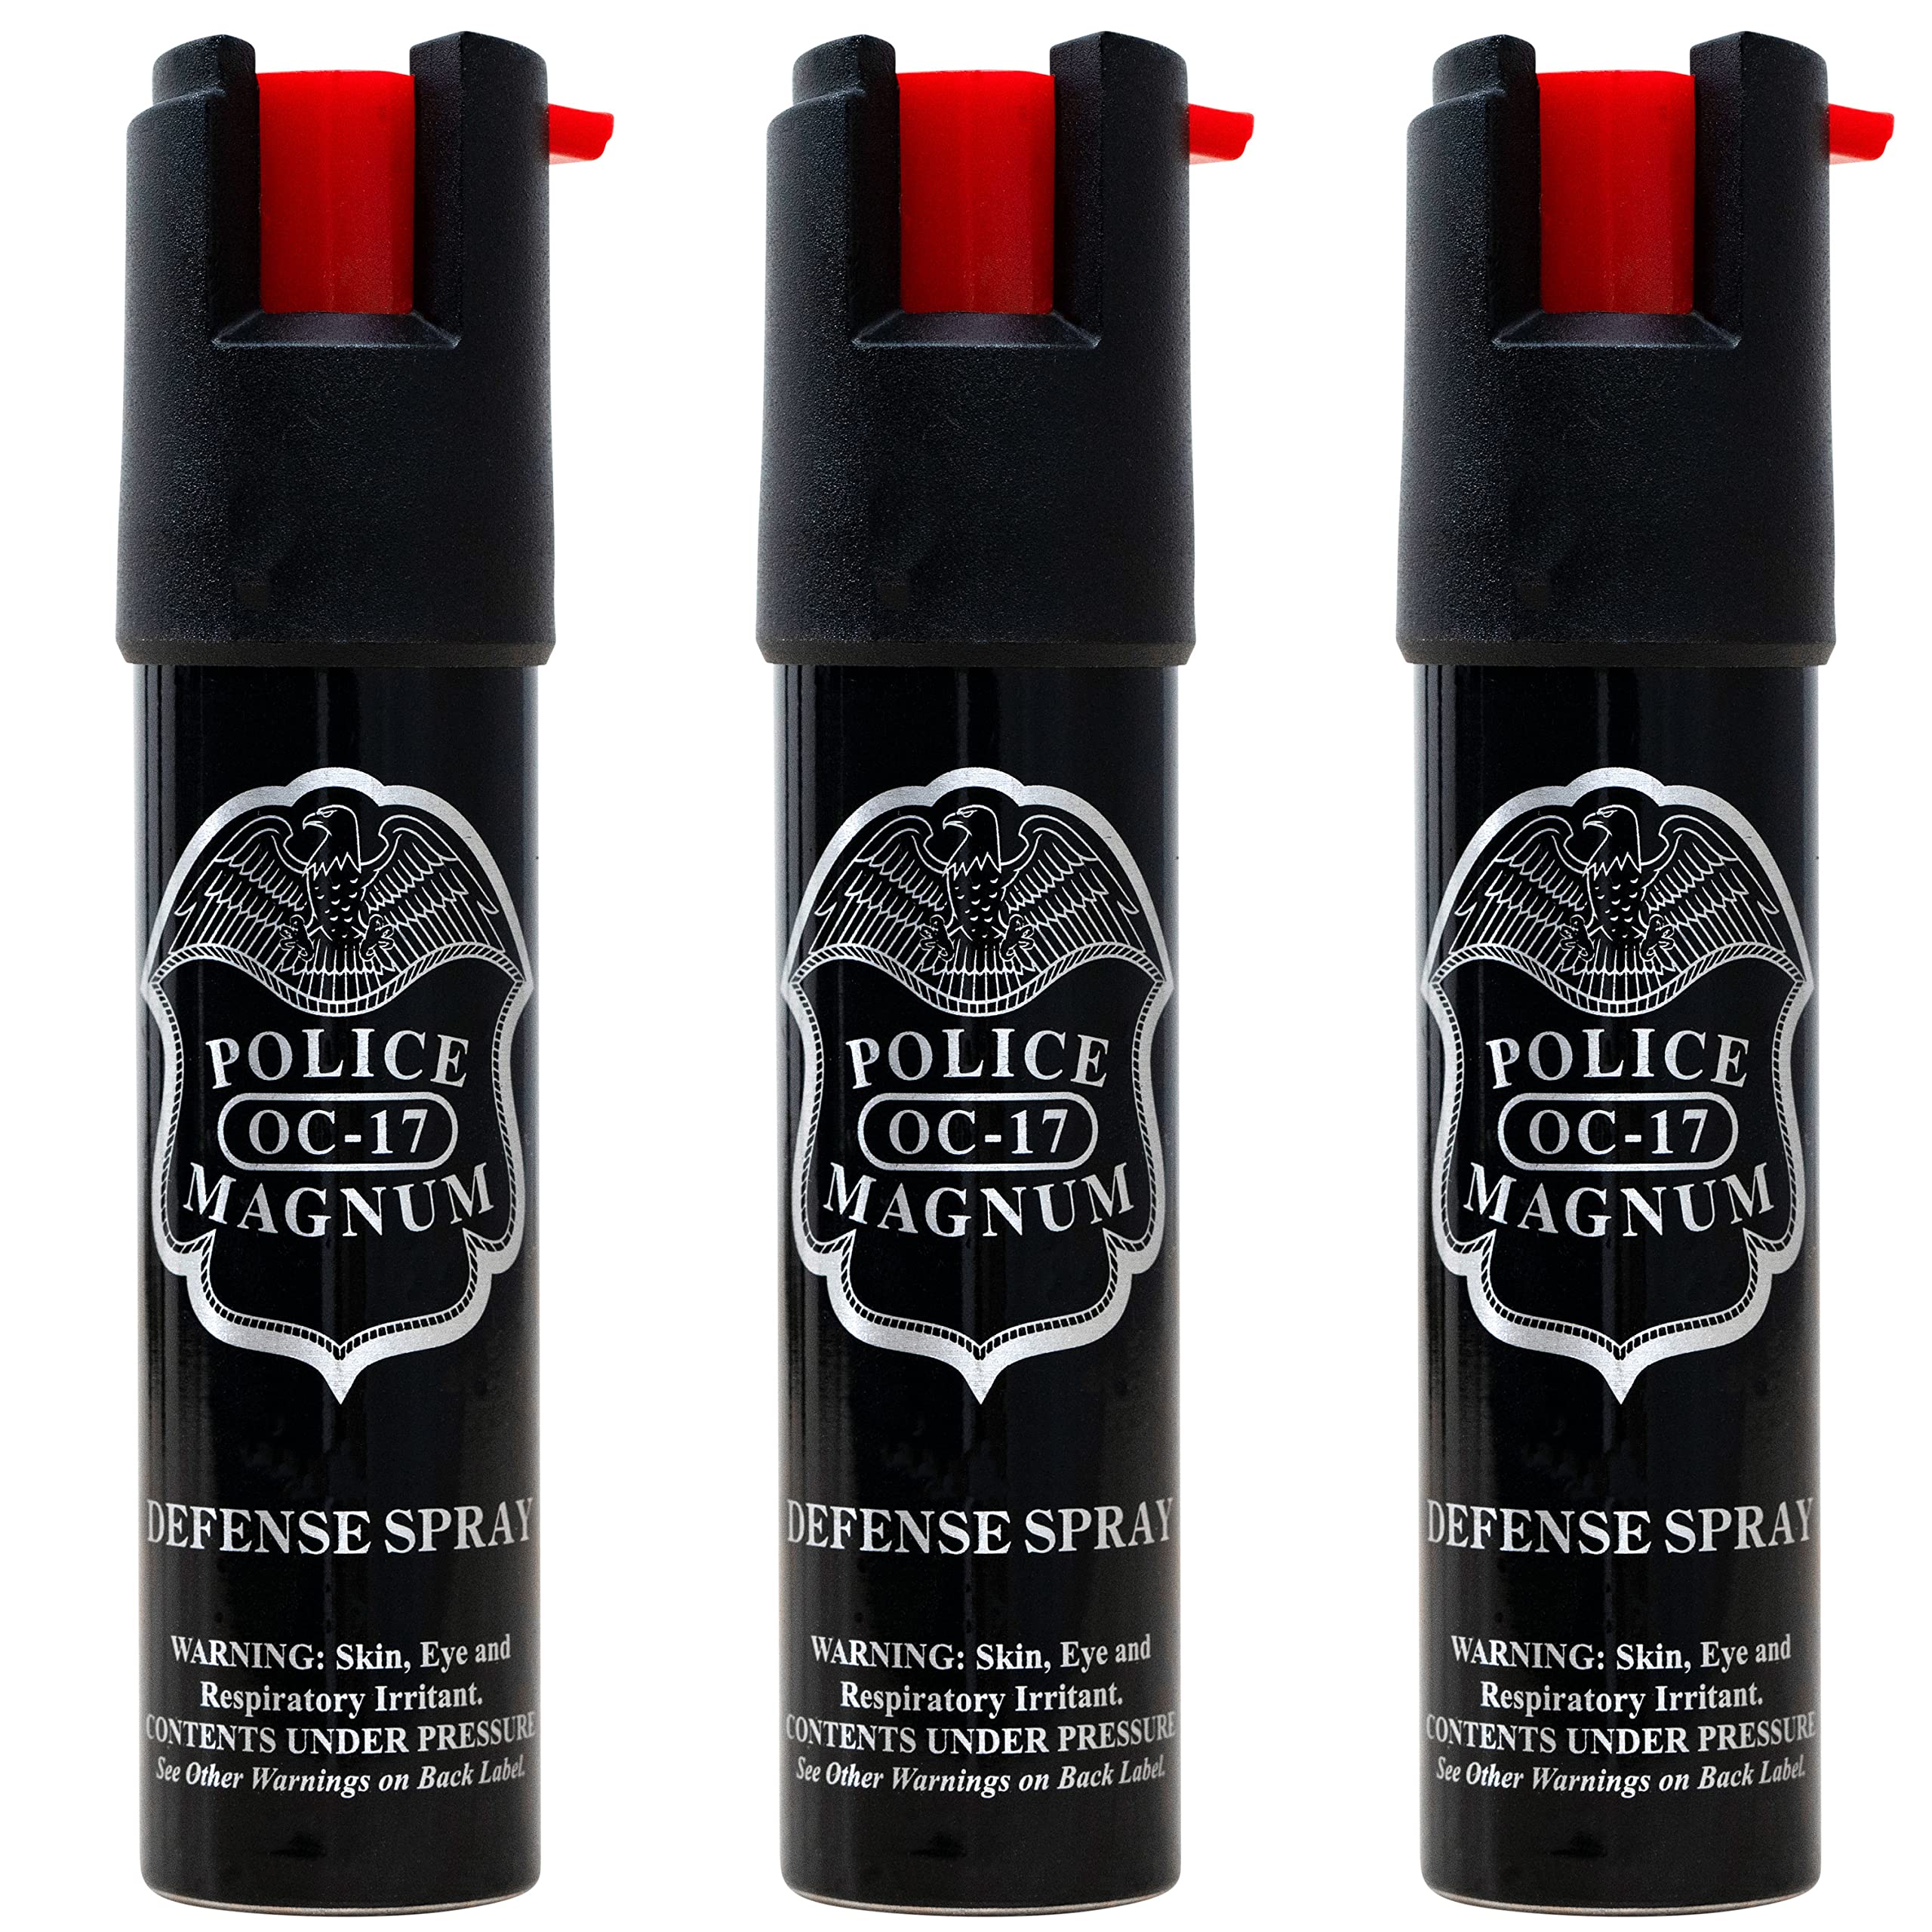  Police Magnum Large Pepper Spray Fogger Self Defense